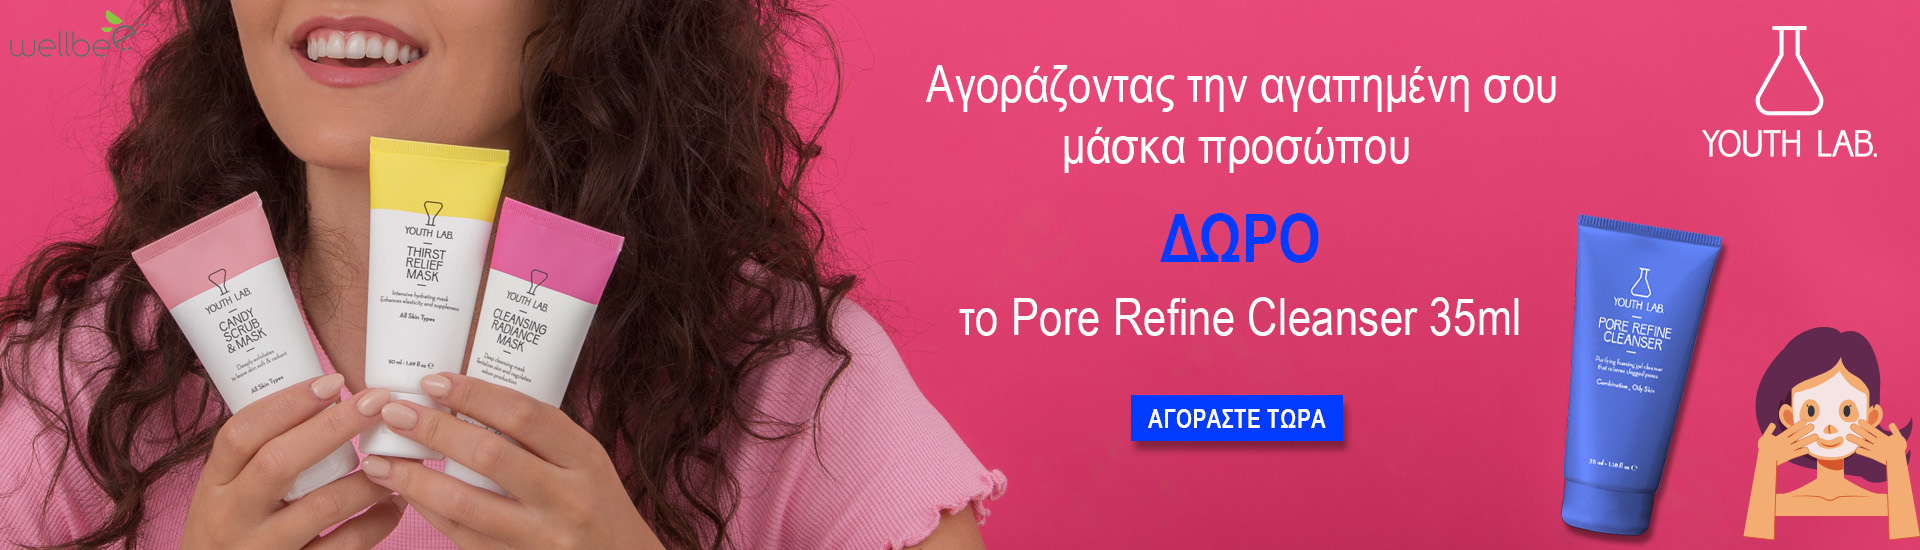 youth lab pore refine cleanser promo